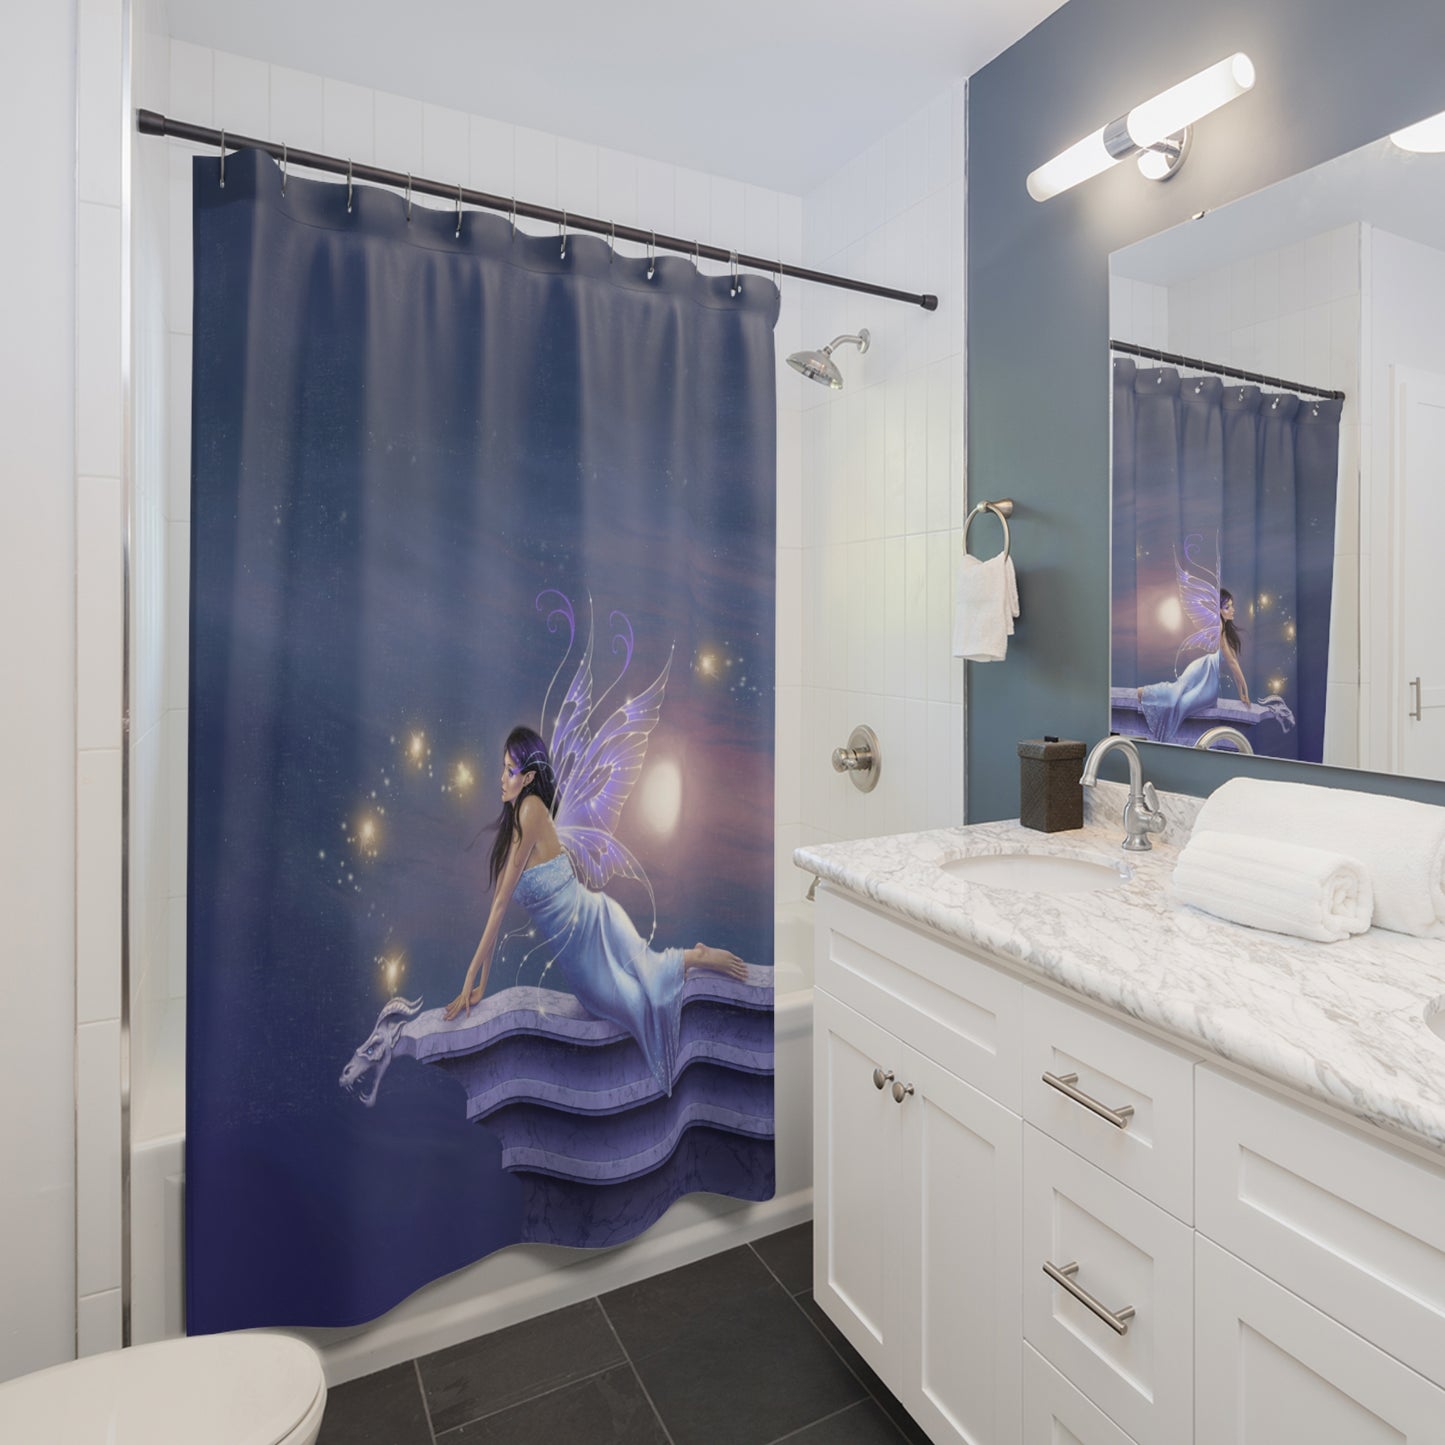 Shower Curtain - Twilight Shimmer